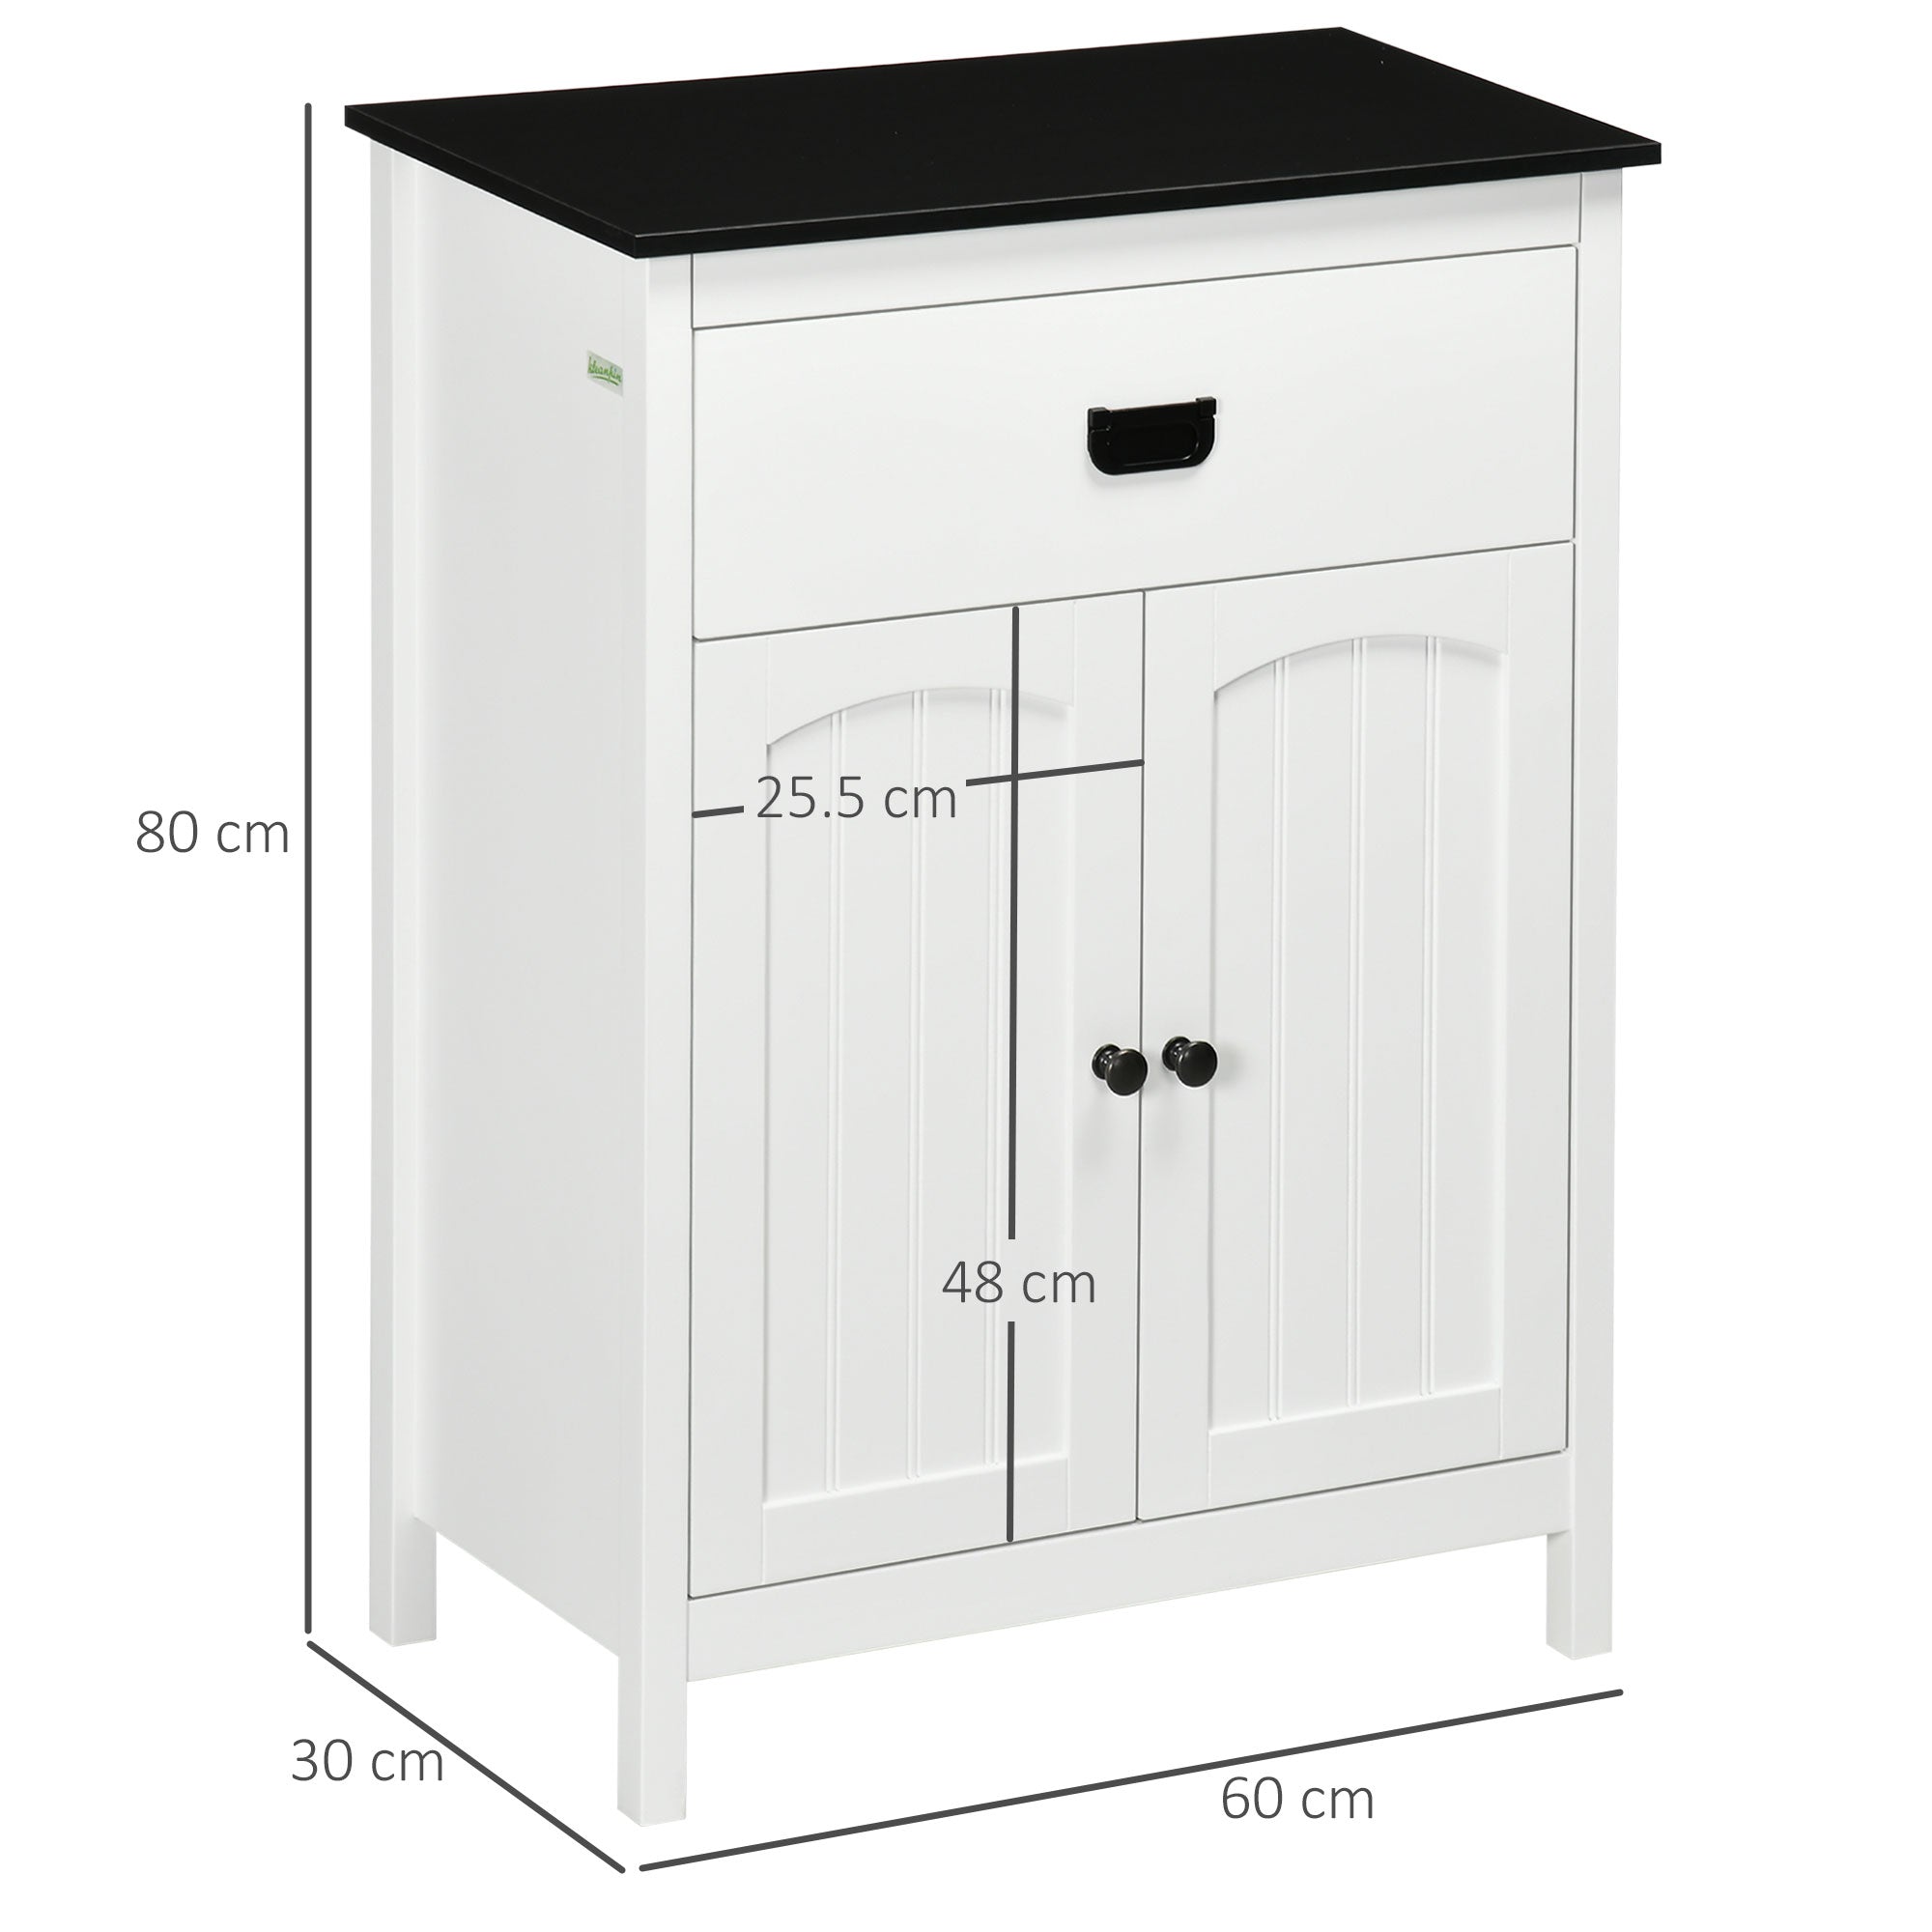 Bathroom Cabinet, Bathroom Storage Unit with Drawer, Double Door Cabinet, Adjustable Shelf for Living Room, White-2